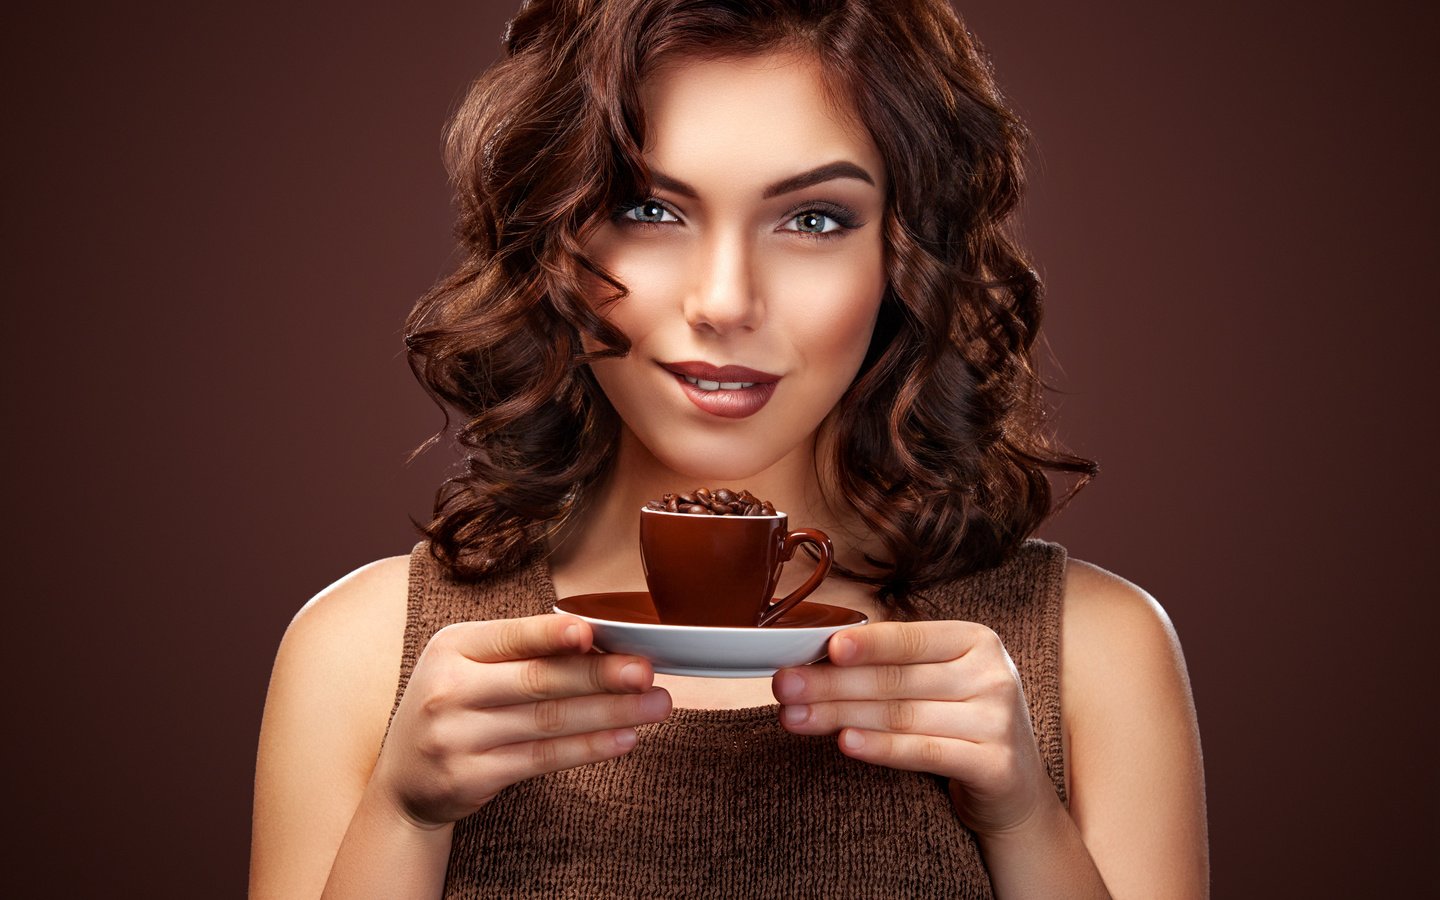 Девушка пьет кофе